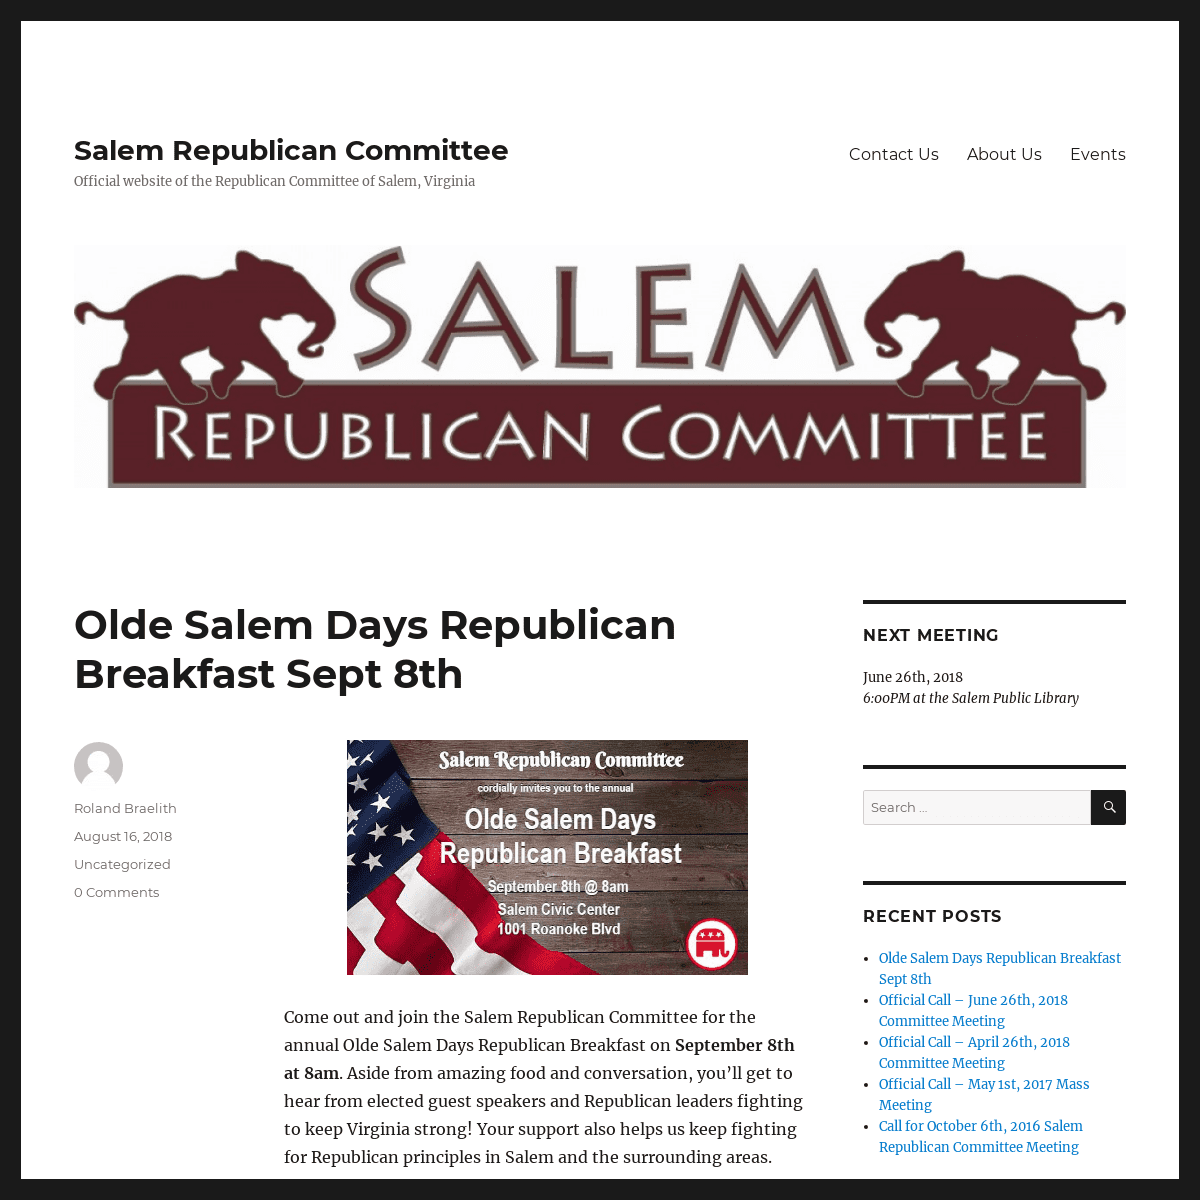 Salem Republican Committee – Official website of the Republican Committee of Salem, Virginia